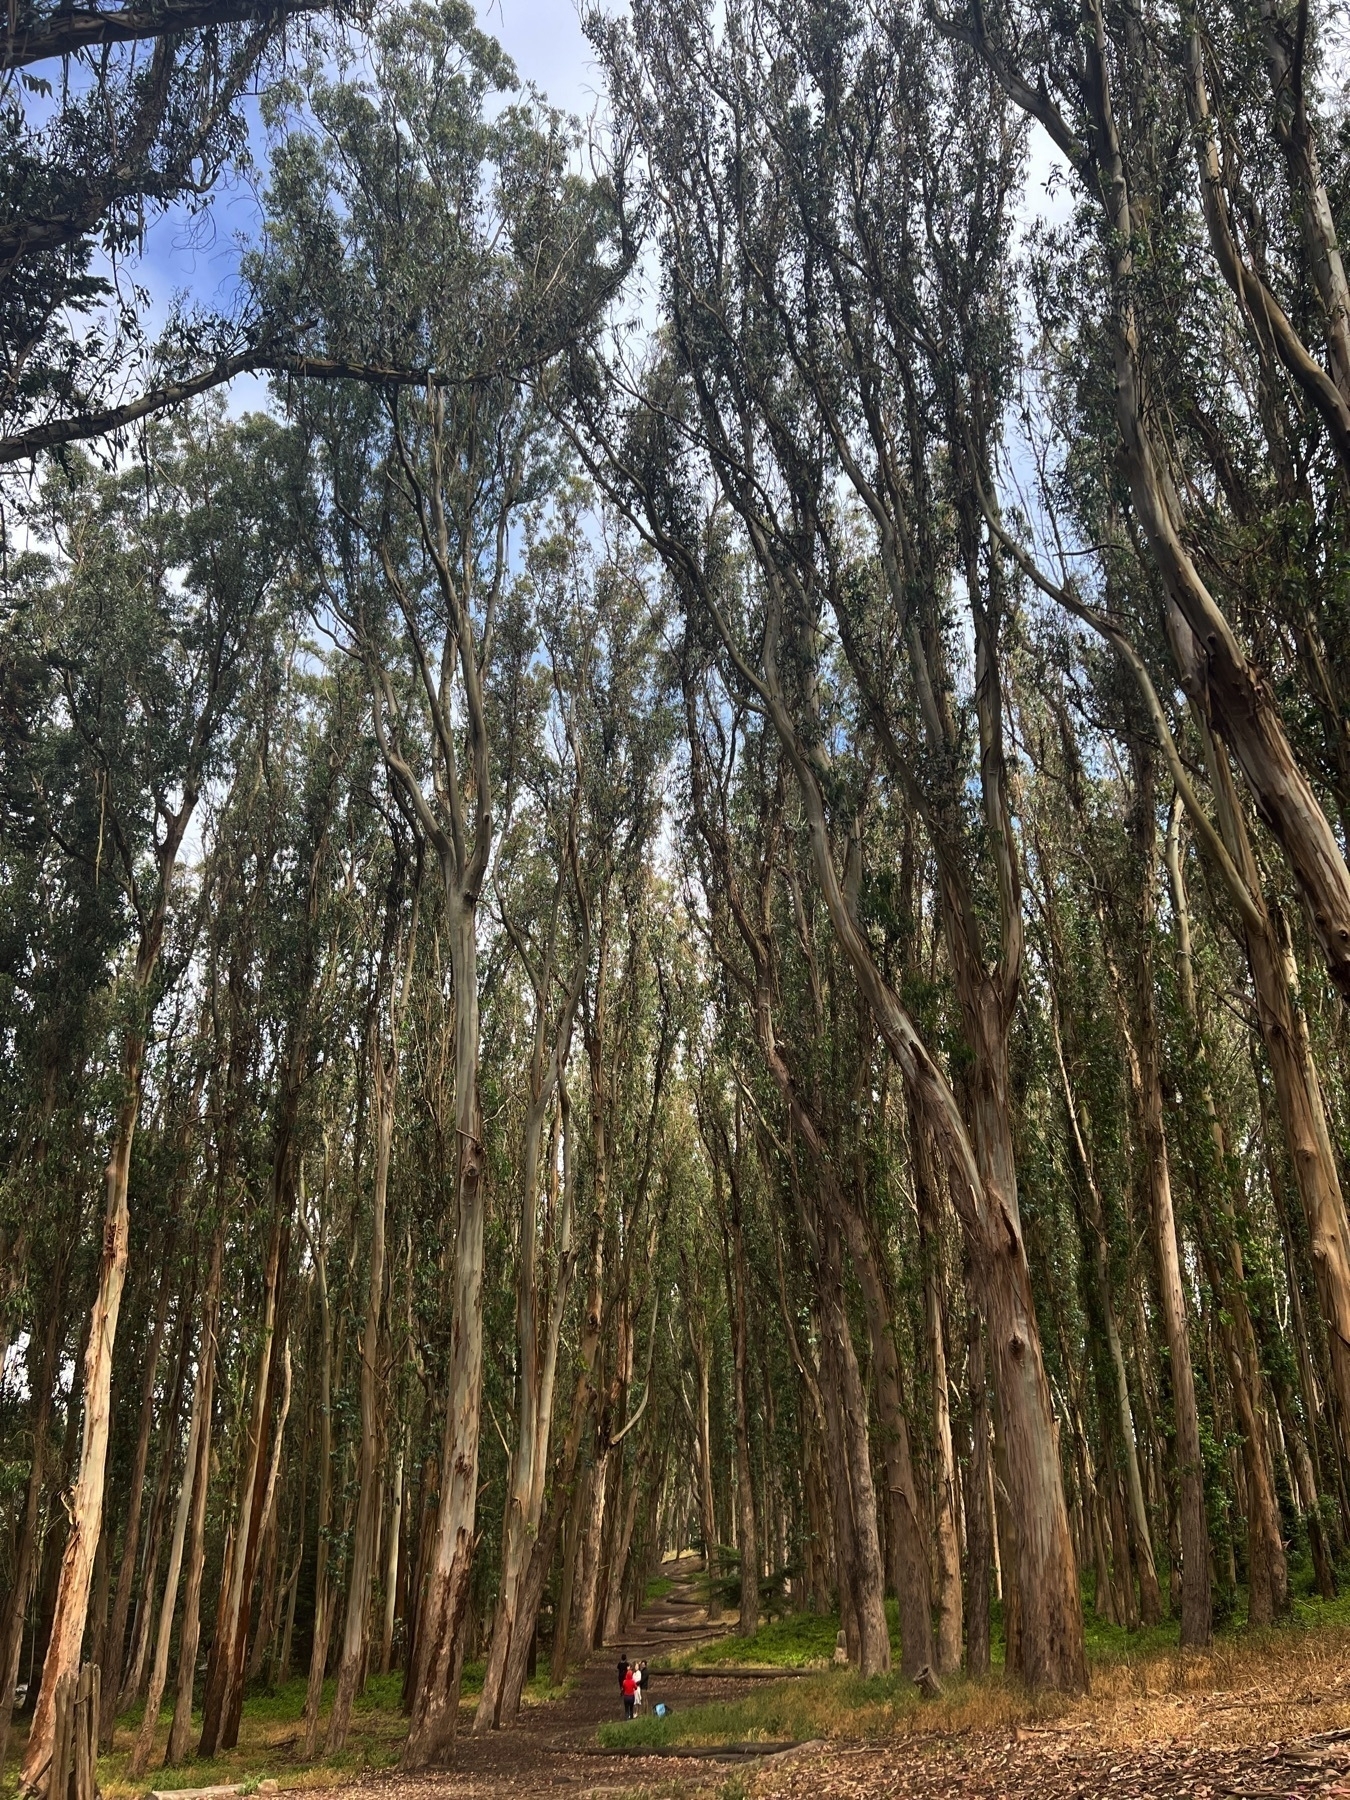 eucalyptus trees along lovers lane in the Presidio Park of San Francisco